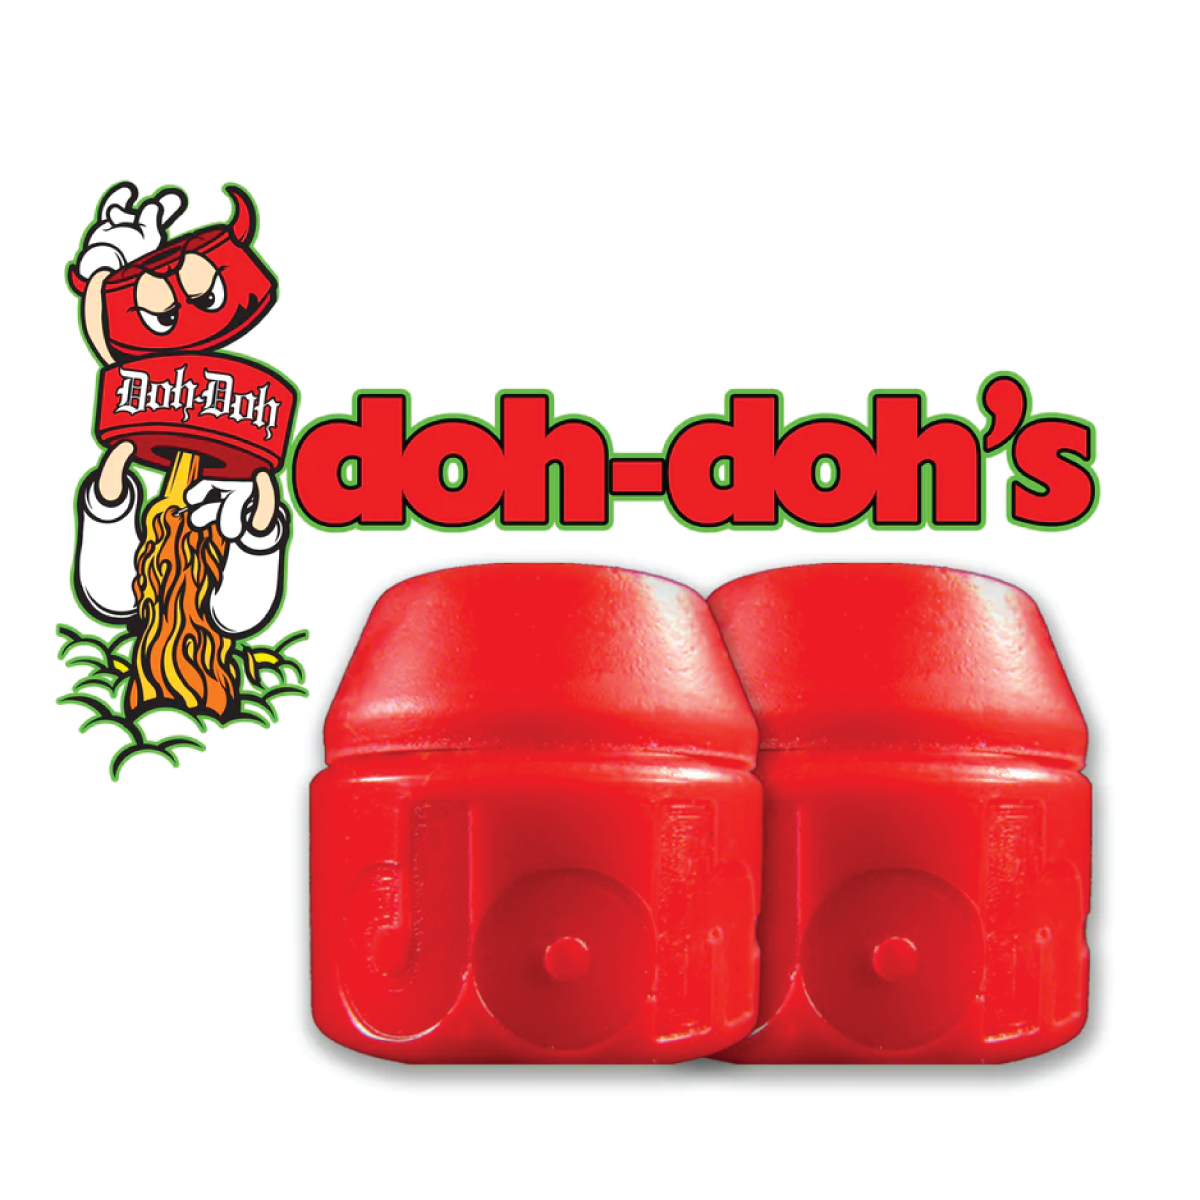 Short's Doh-Doh Bushing's